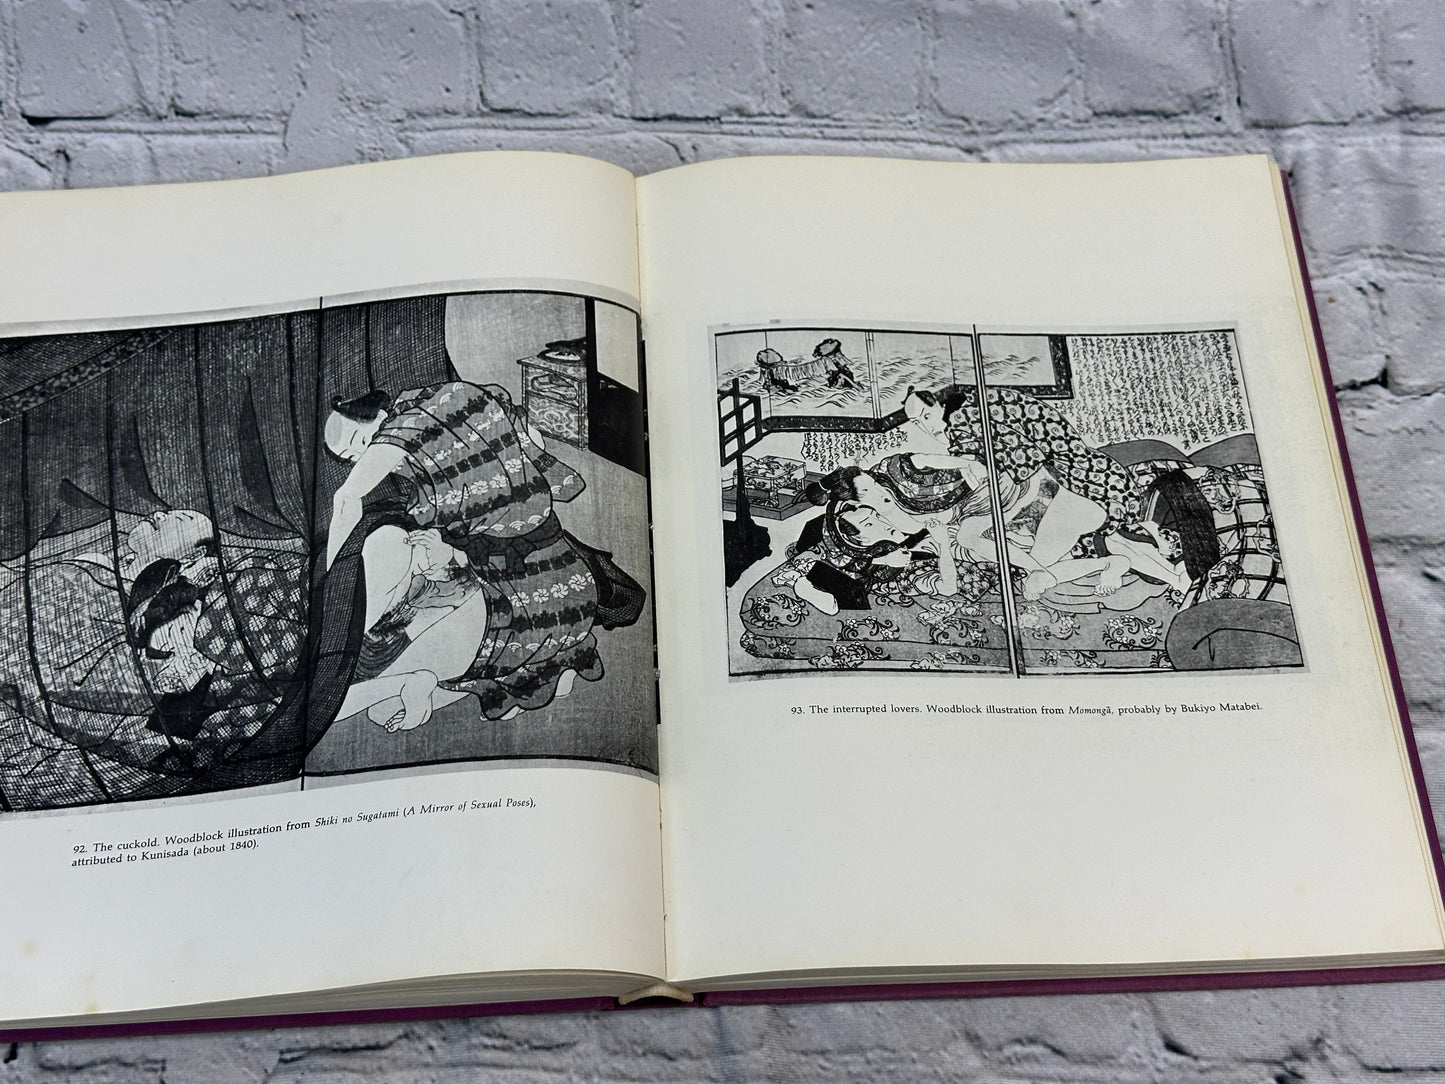 Studies In Erotic Art by Theodore Bowie, et. al [1970]